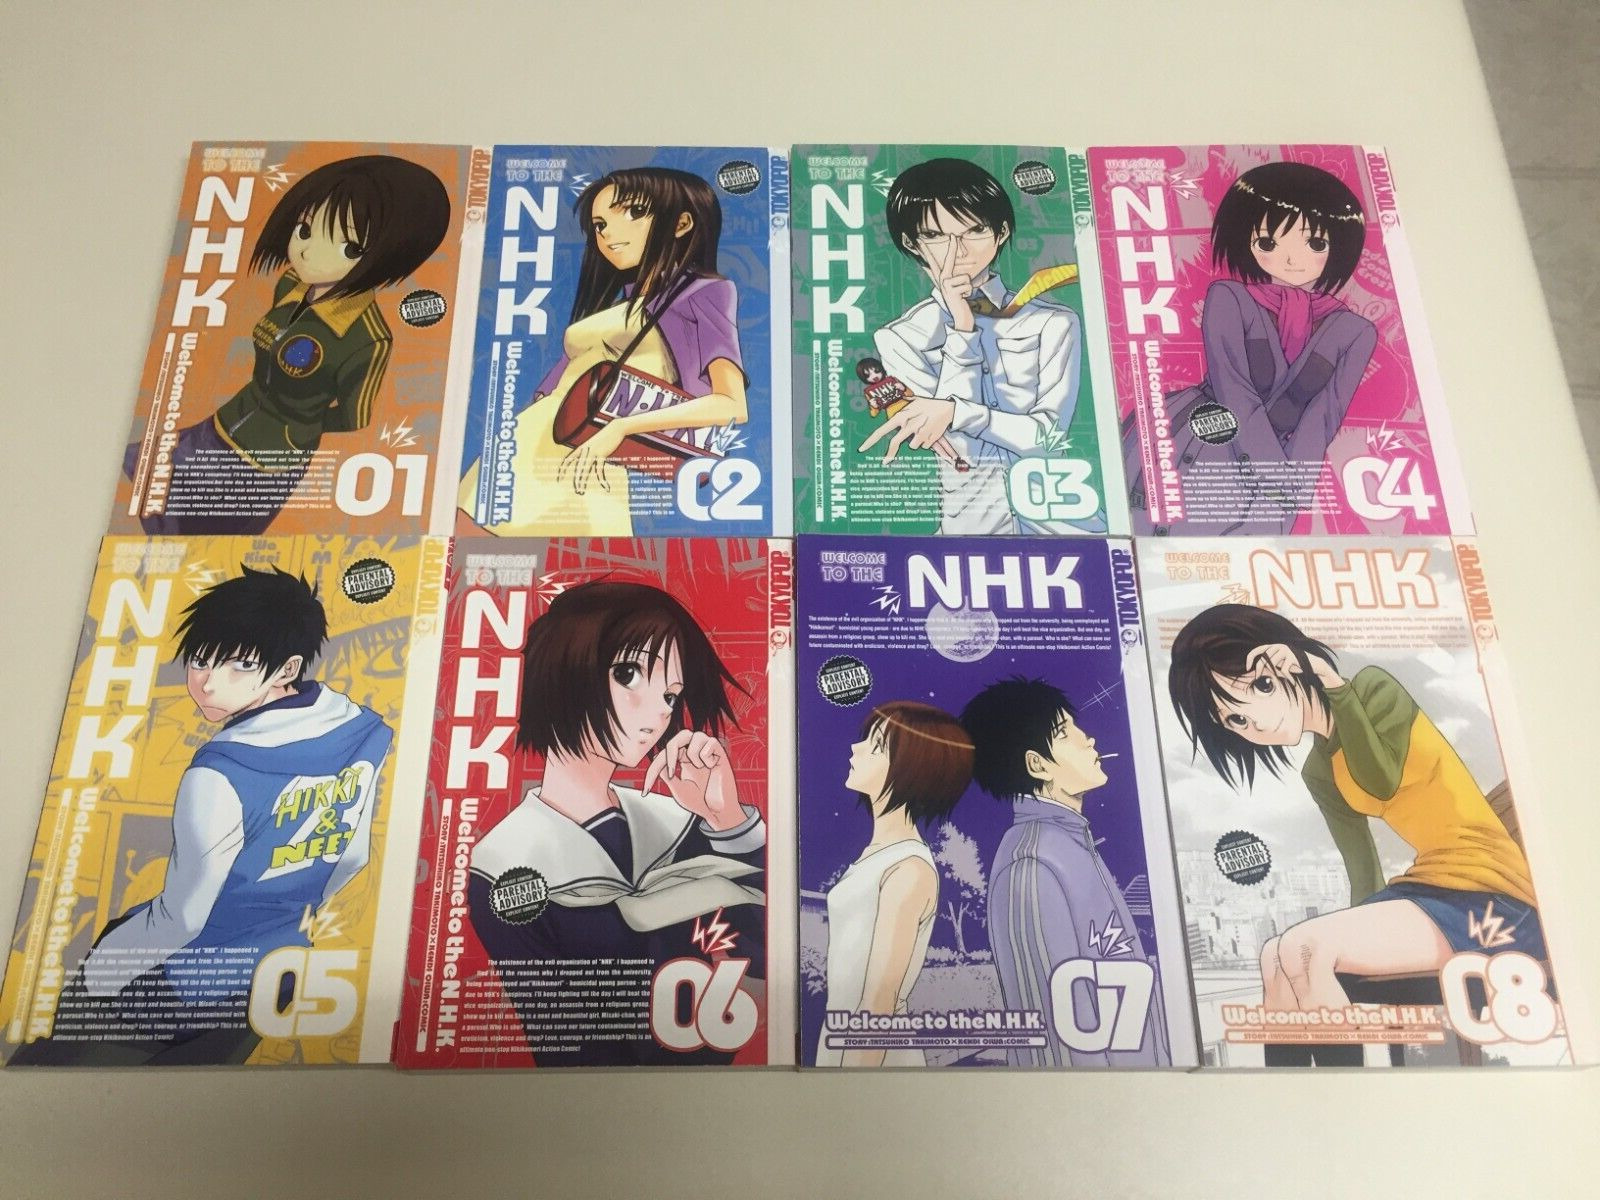 Welcome to the NHK Complete English Manga Set Series Volumes 1-8 Vol N.H.K.